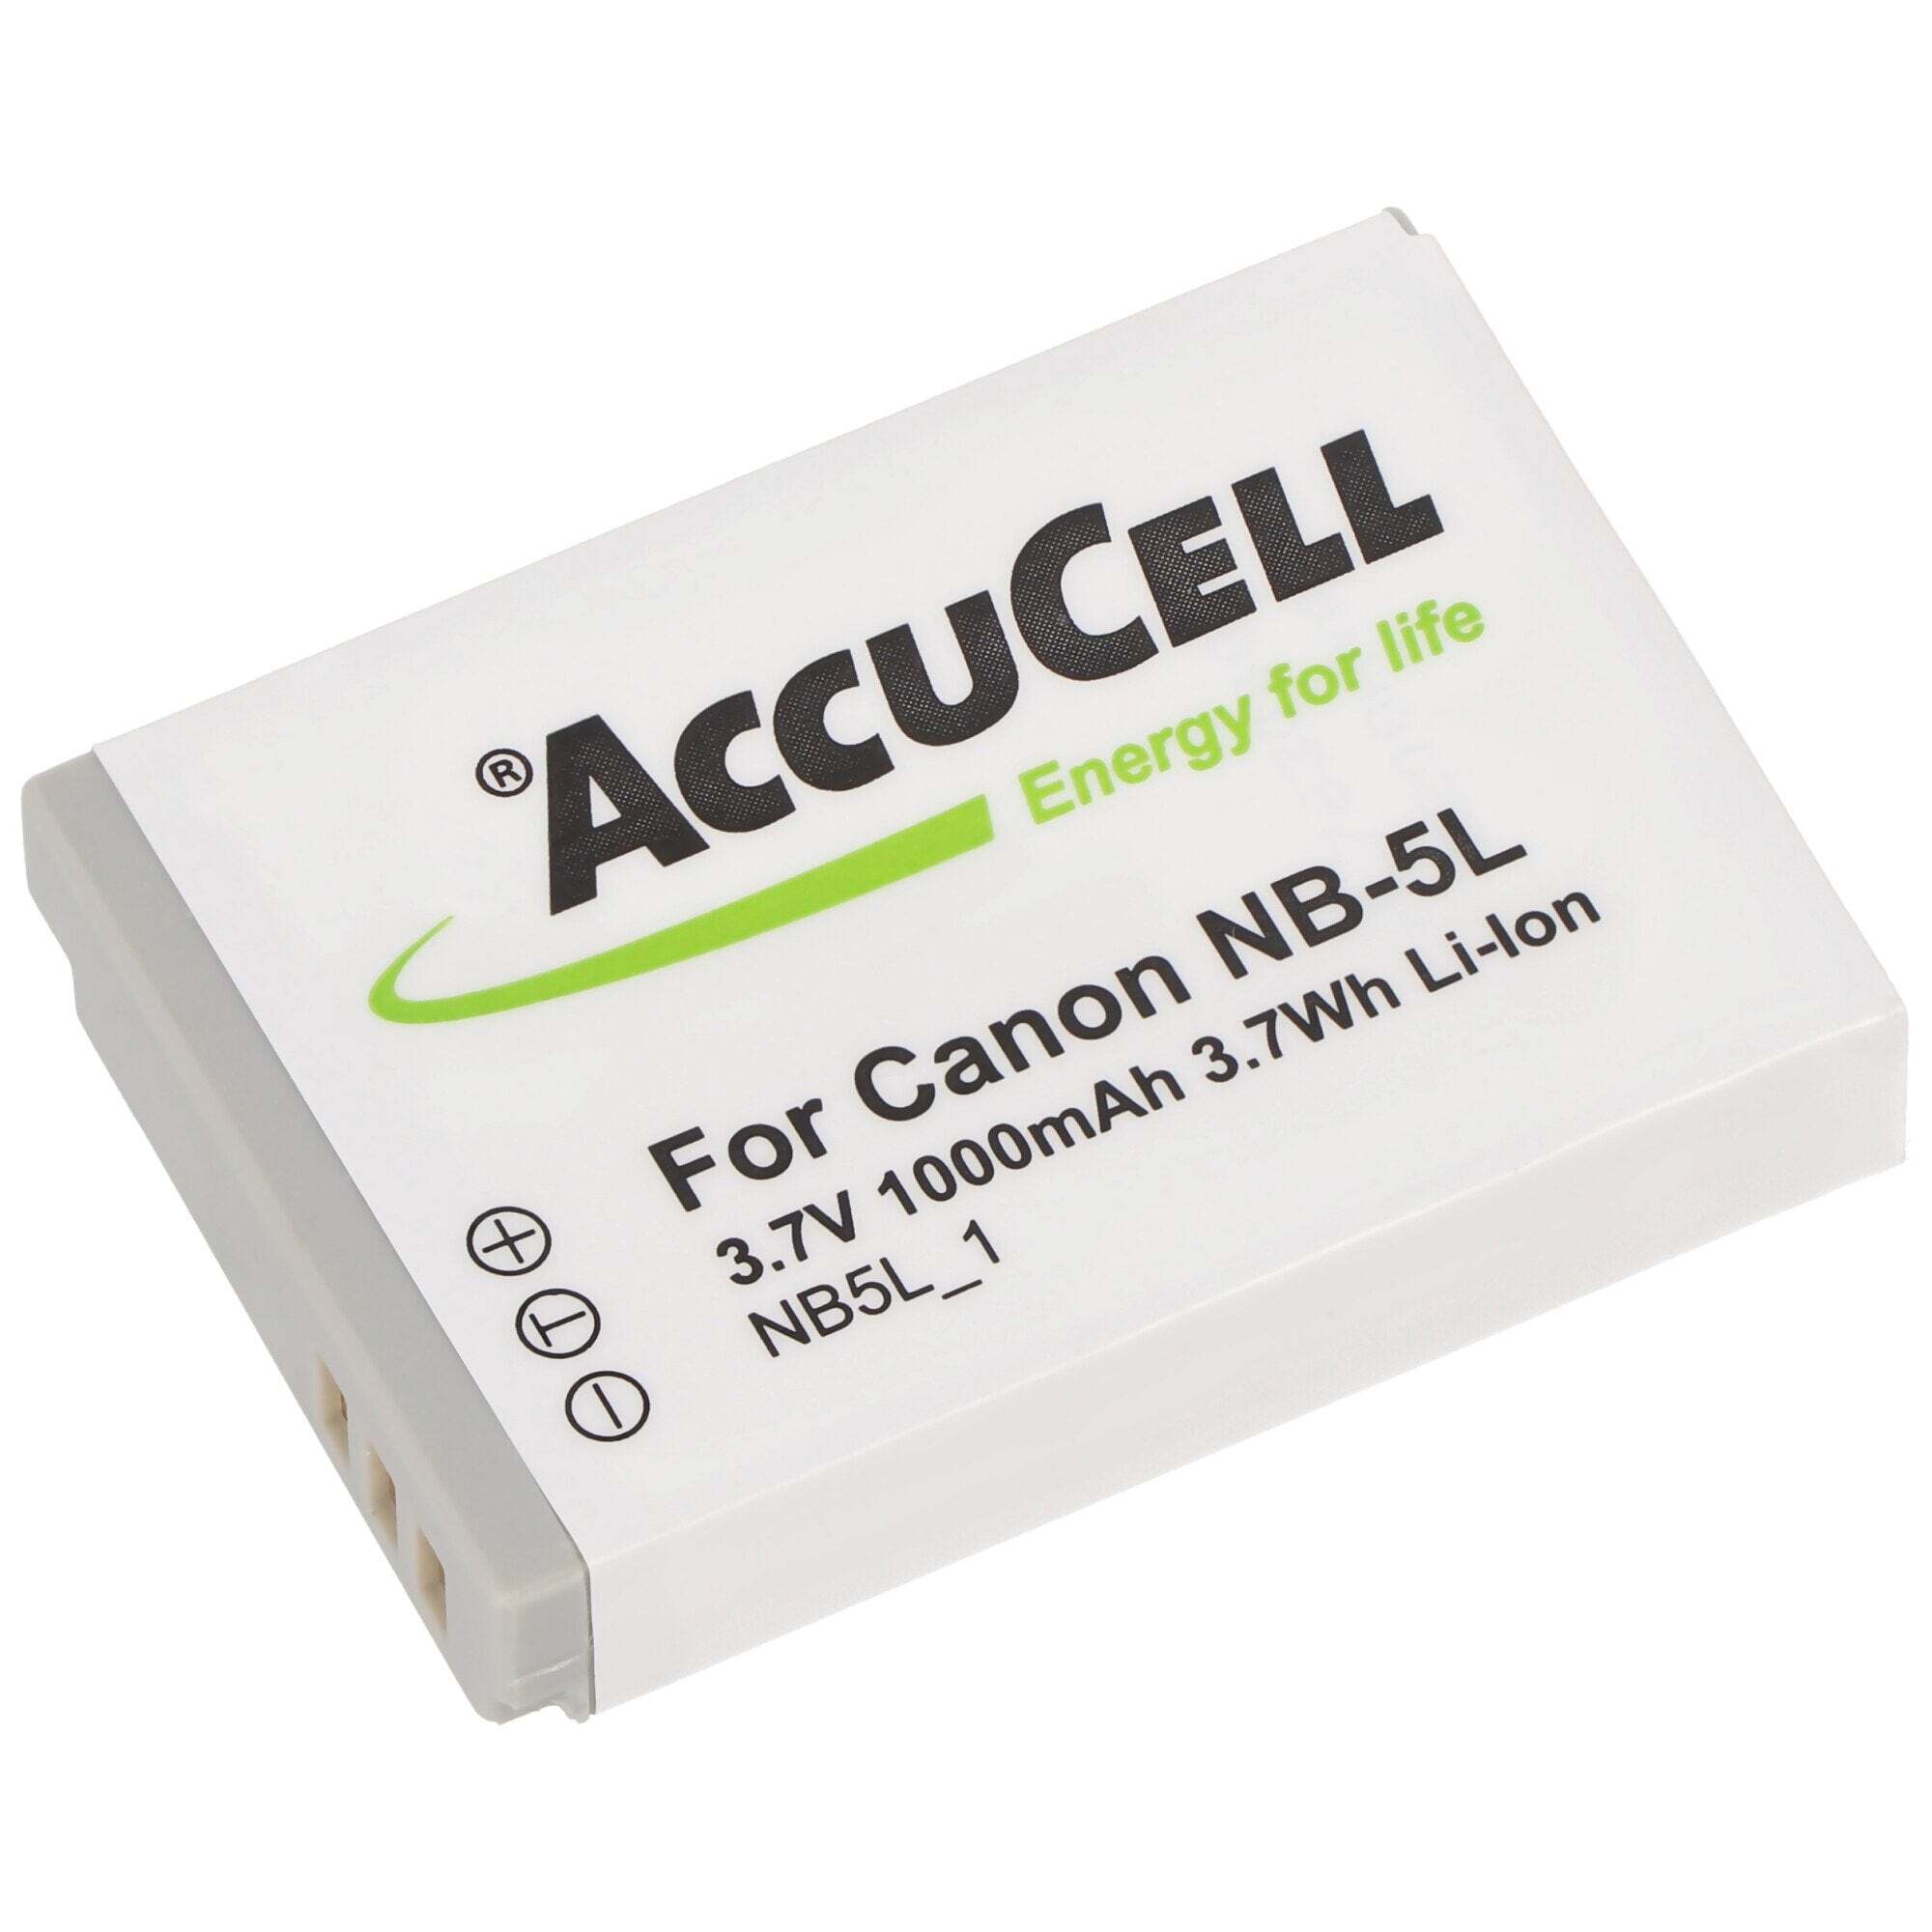 ACCUCELL AccuCell-batterij geschikt voor Canon NB-5L, IXUS 800IS, SD700, SX200